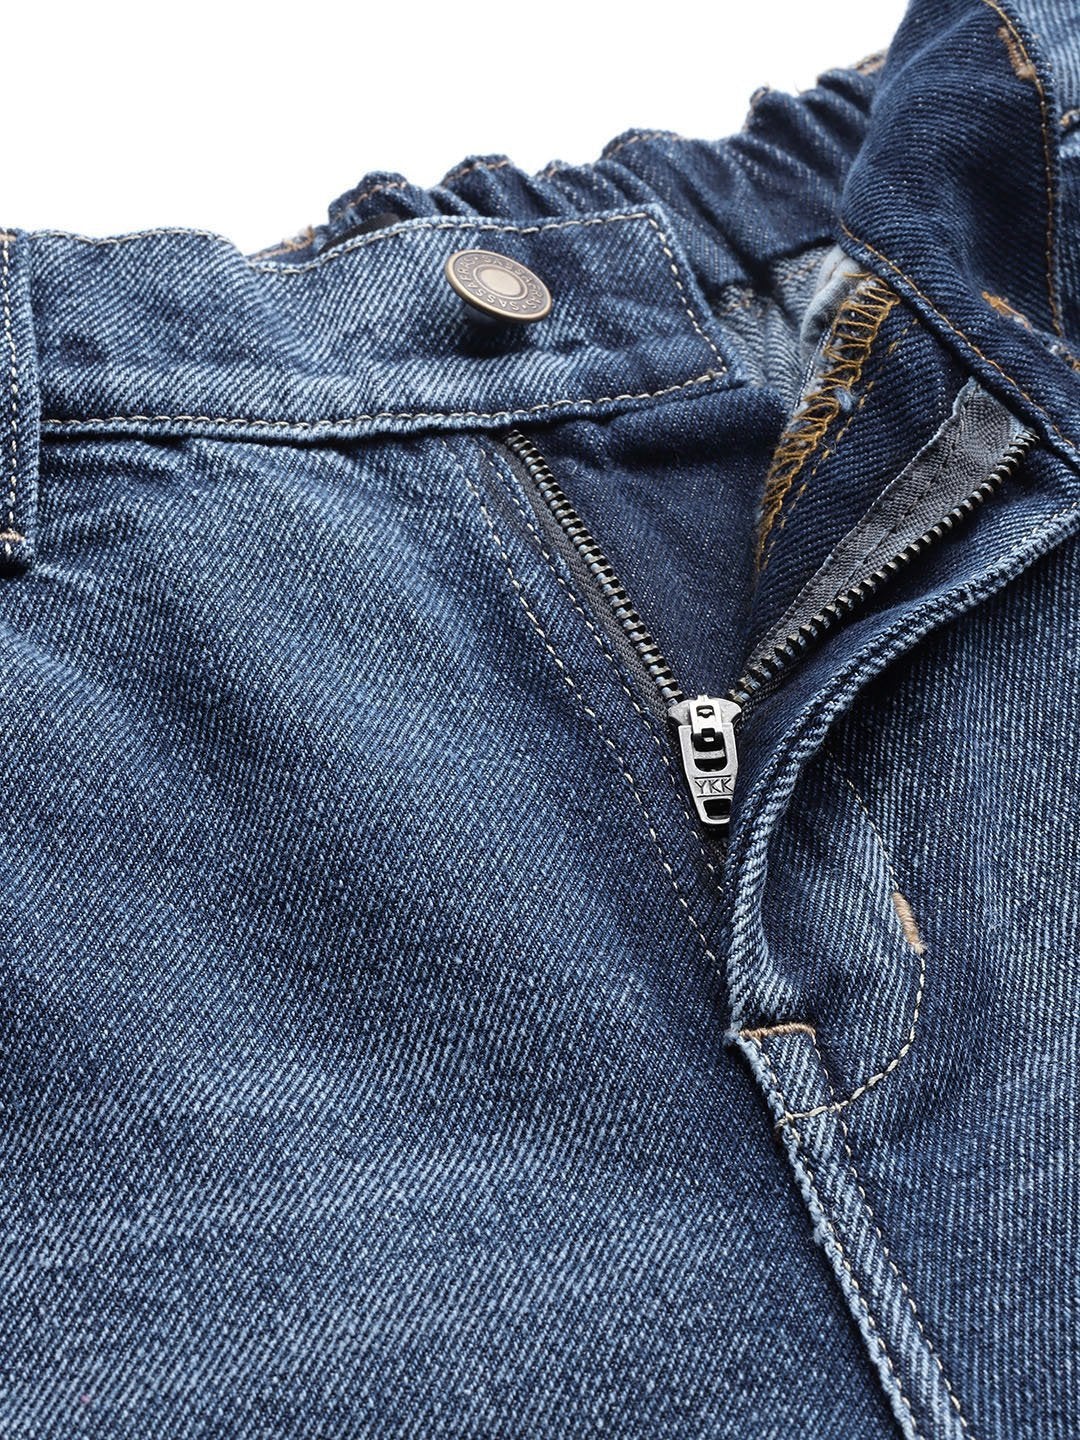 Women's Blue Vintage Distress Jeans - SASSAFRAS